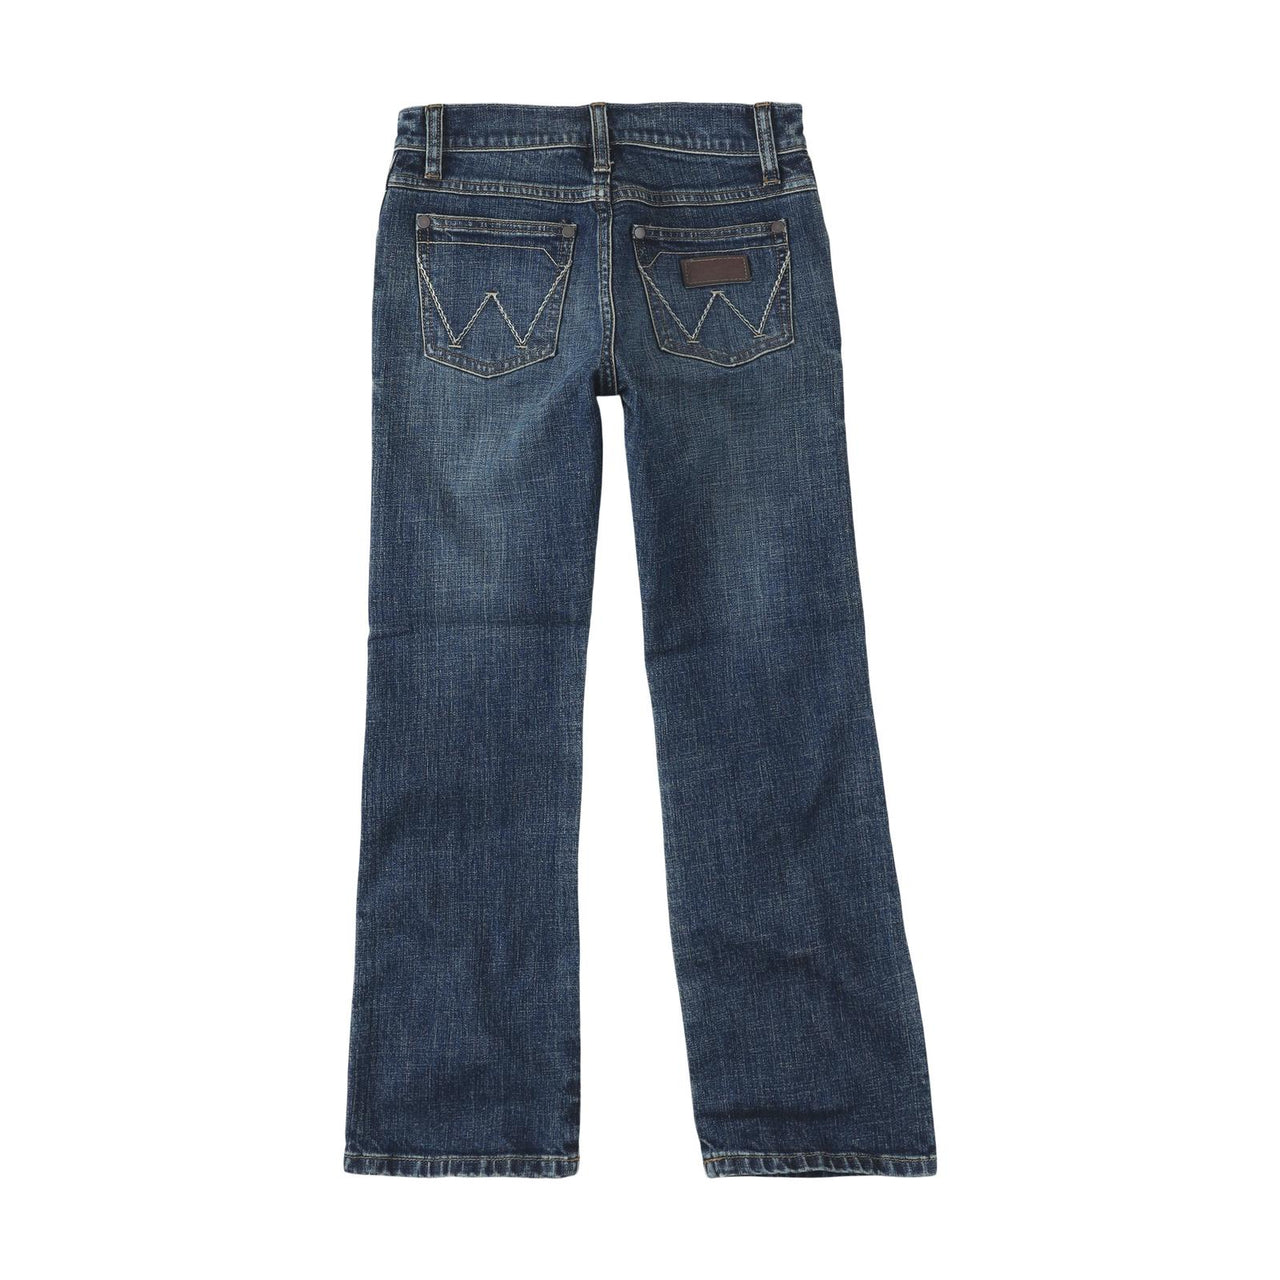 Wrangler Boys Retro Slim Boot Cut Jeans (8-20) - Layton